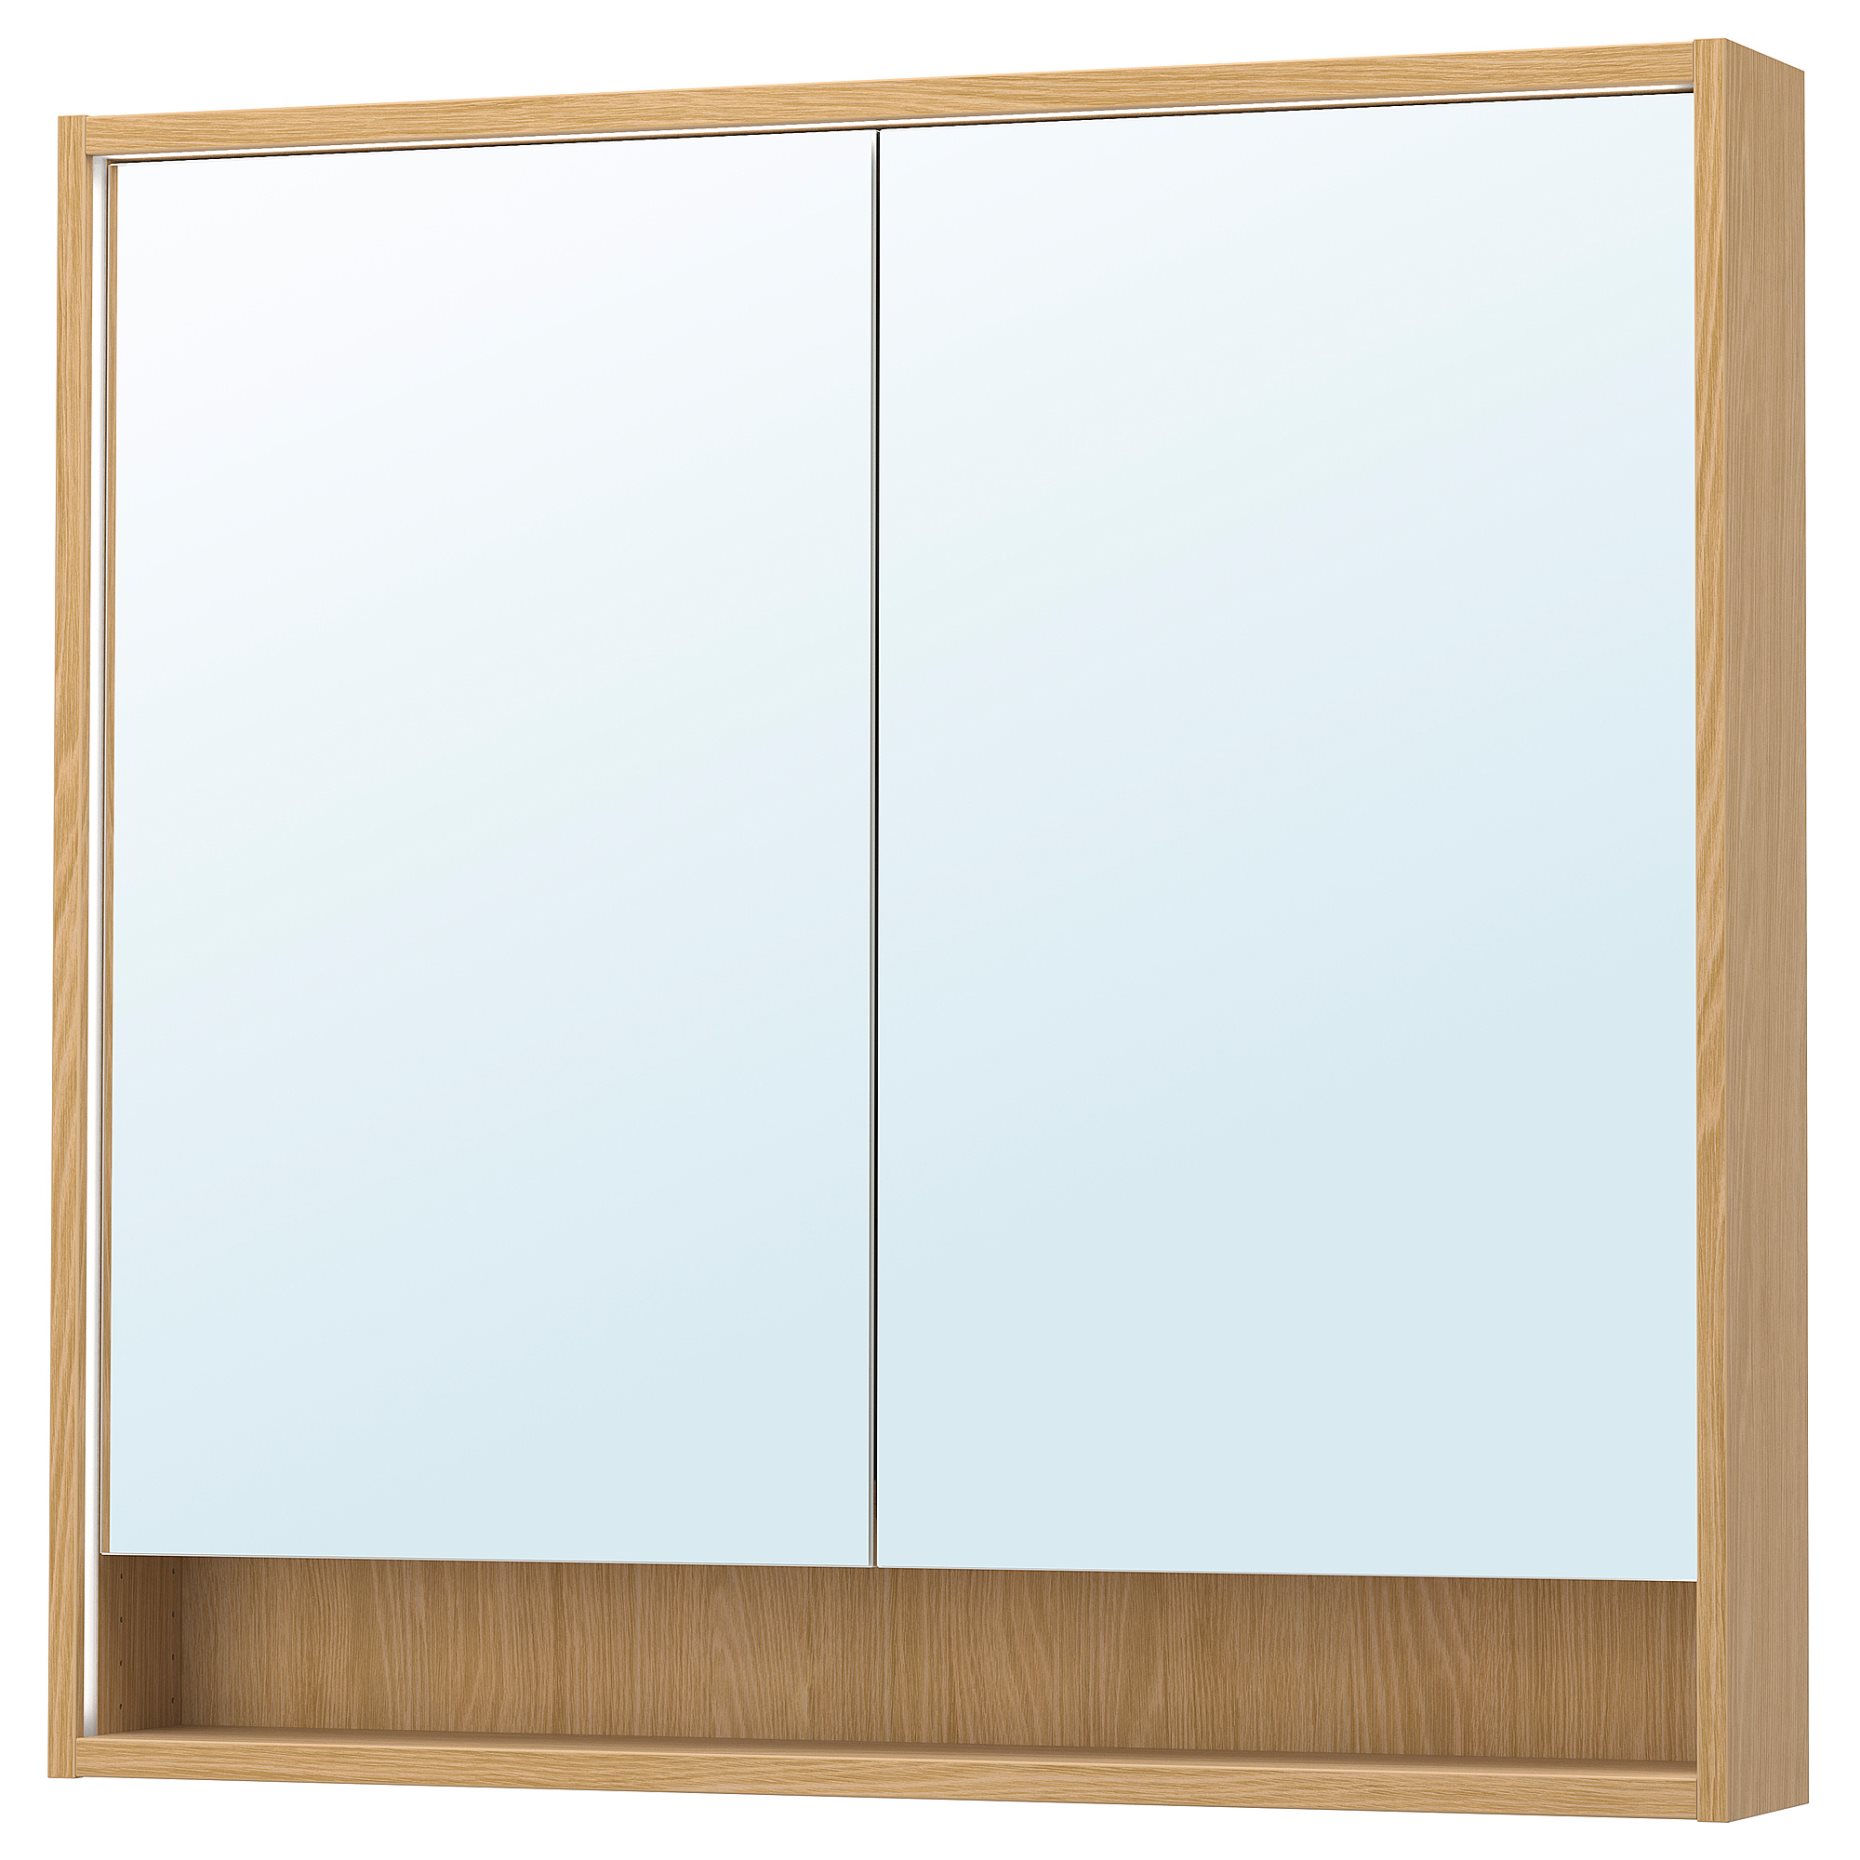 FAXALVEN, ντουλάπι με καθρέφτη με ενσωματωμένο φωτισμό, 100x15x95 cm, 205.449.82